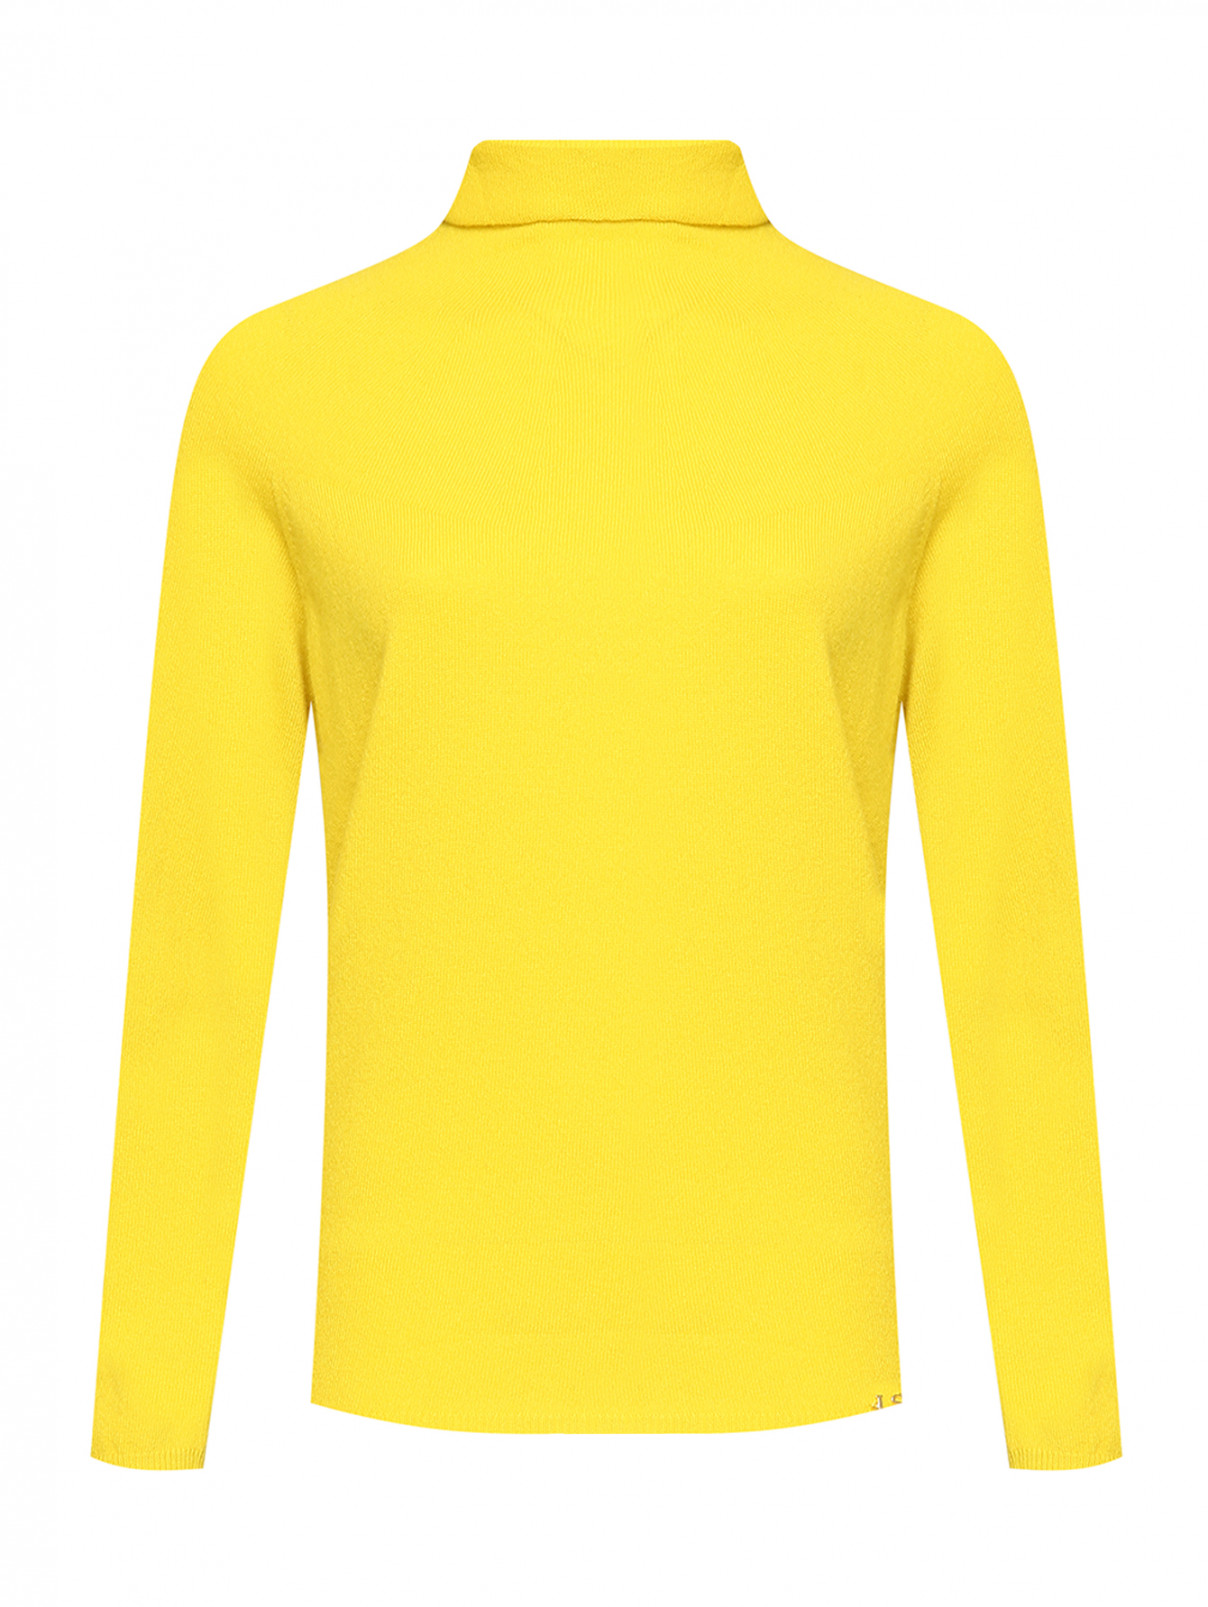 Водолазка из шерсти и кашемира Luisa Spagnoli  –  Общий вид  – Цвет:  Желтый